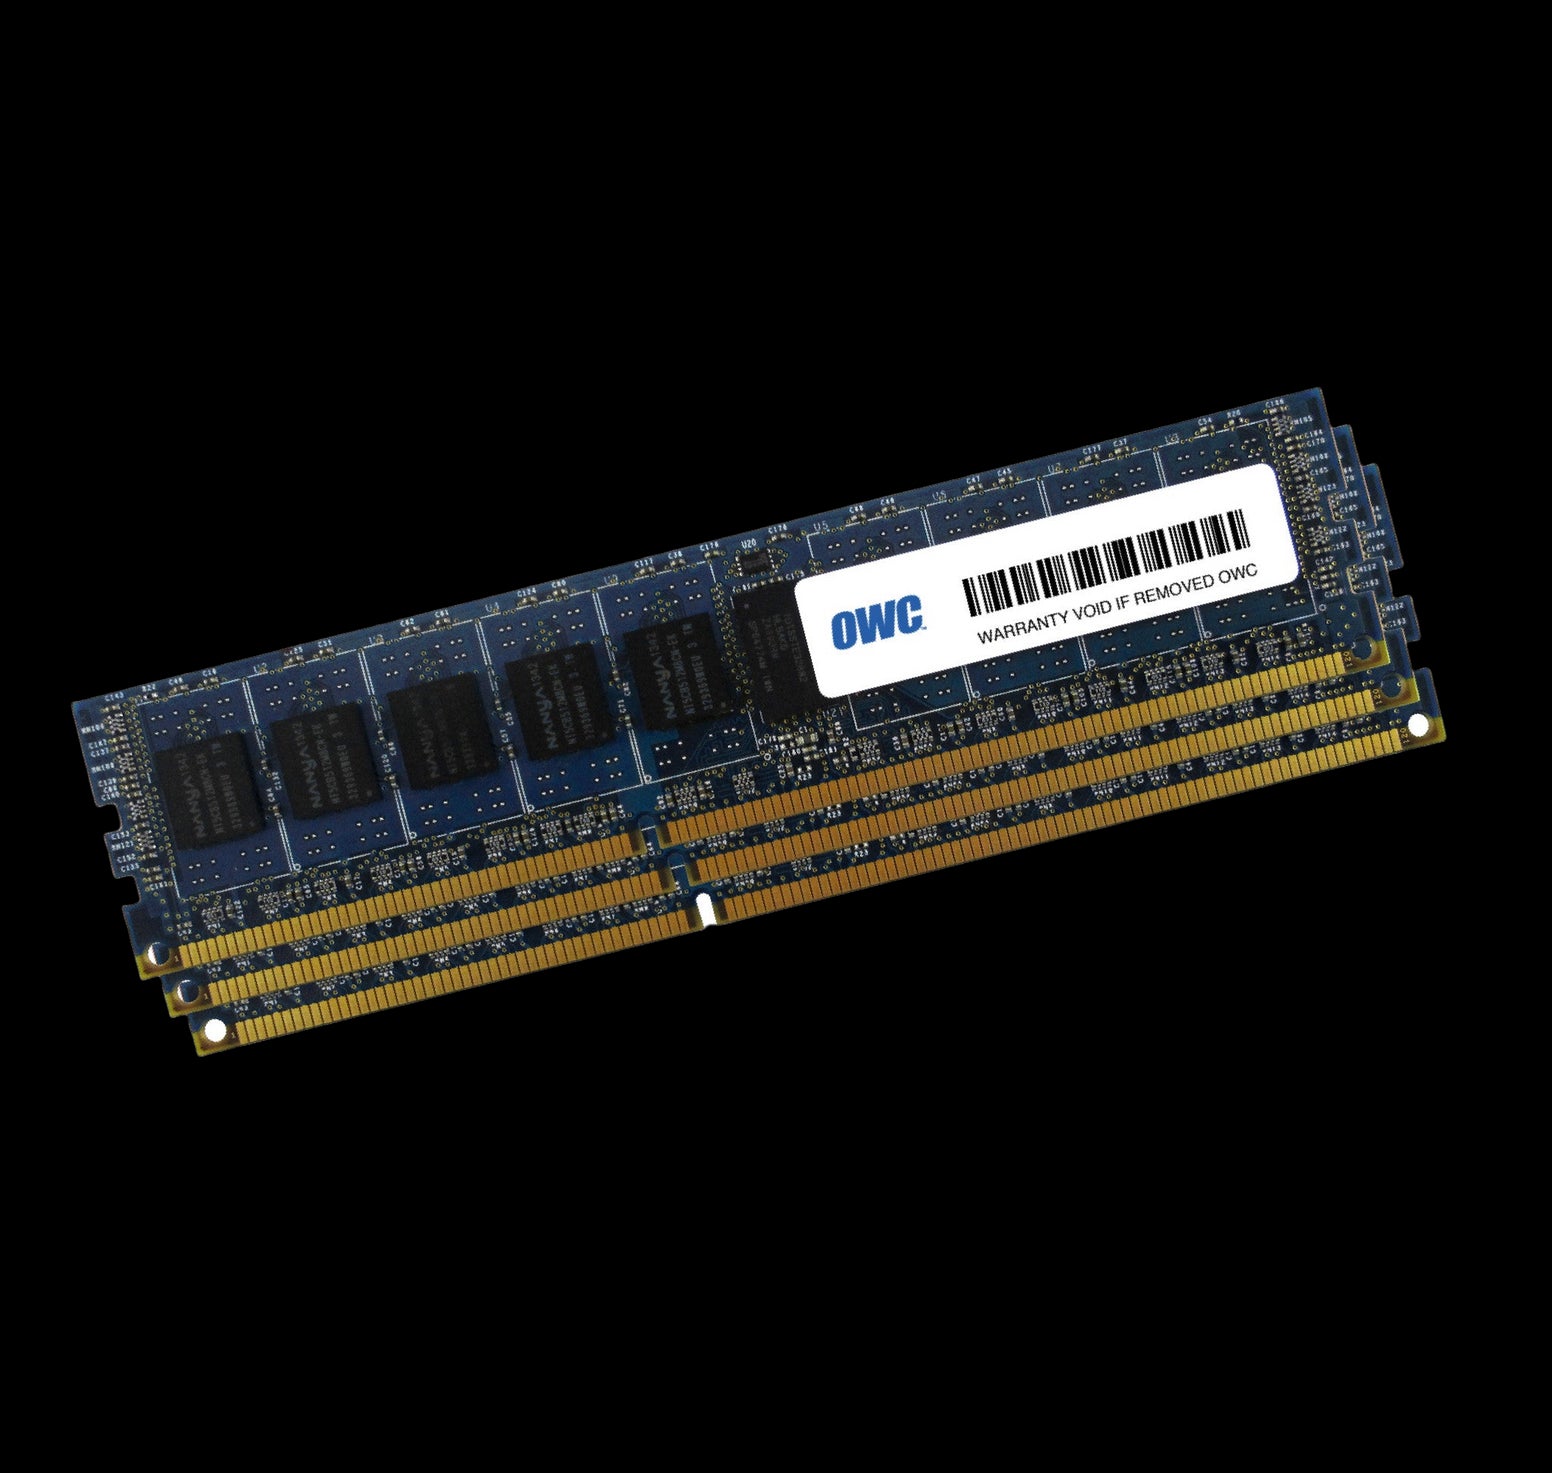 24GB OWC Matched Memory Upgrade Kit (3 x 8GB) 1333MHz PC3-10600 DDR3 ECC SDRAM